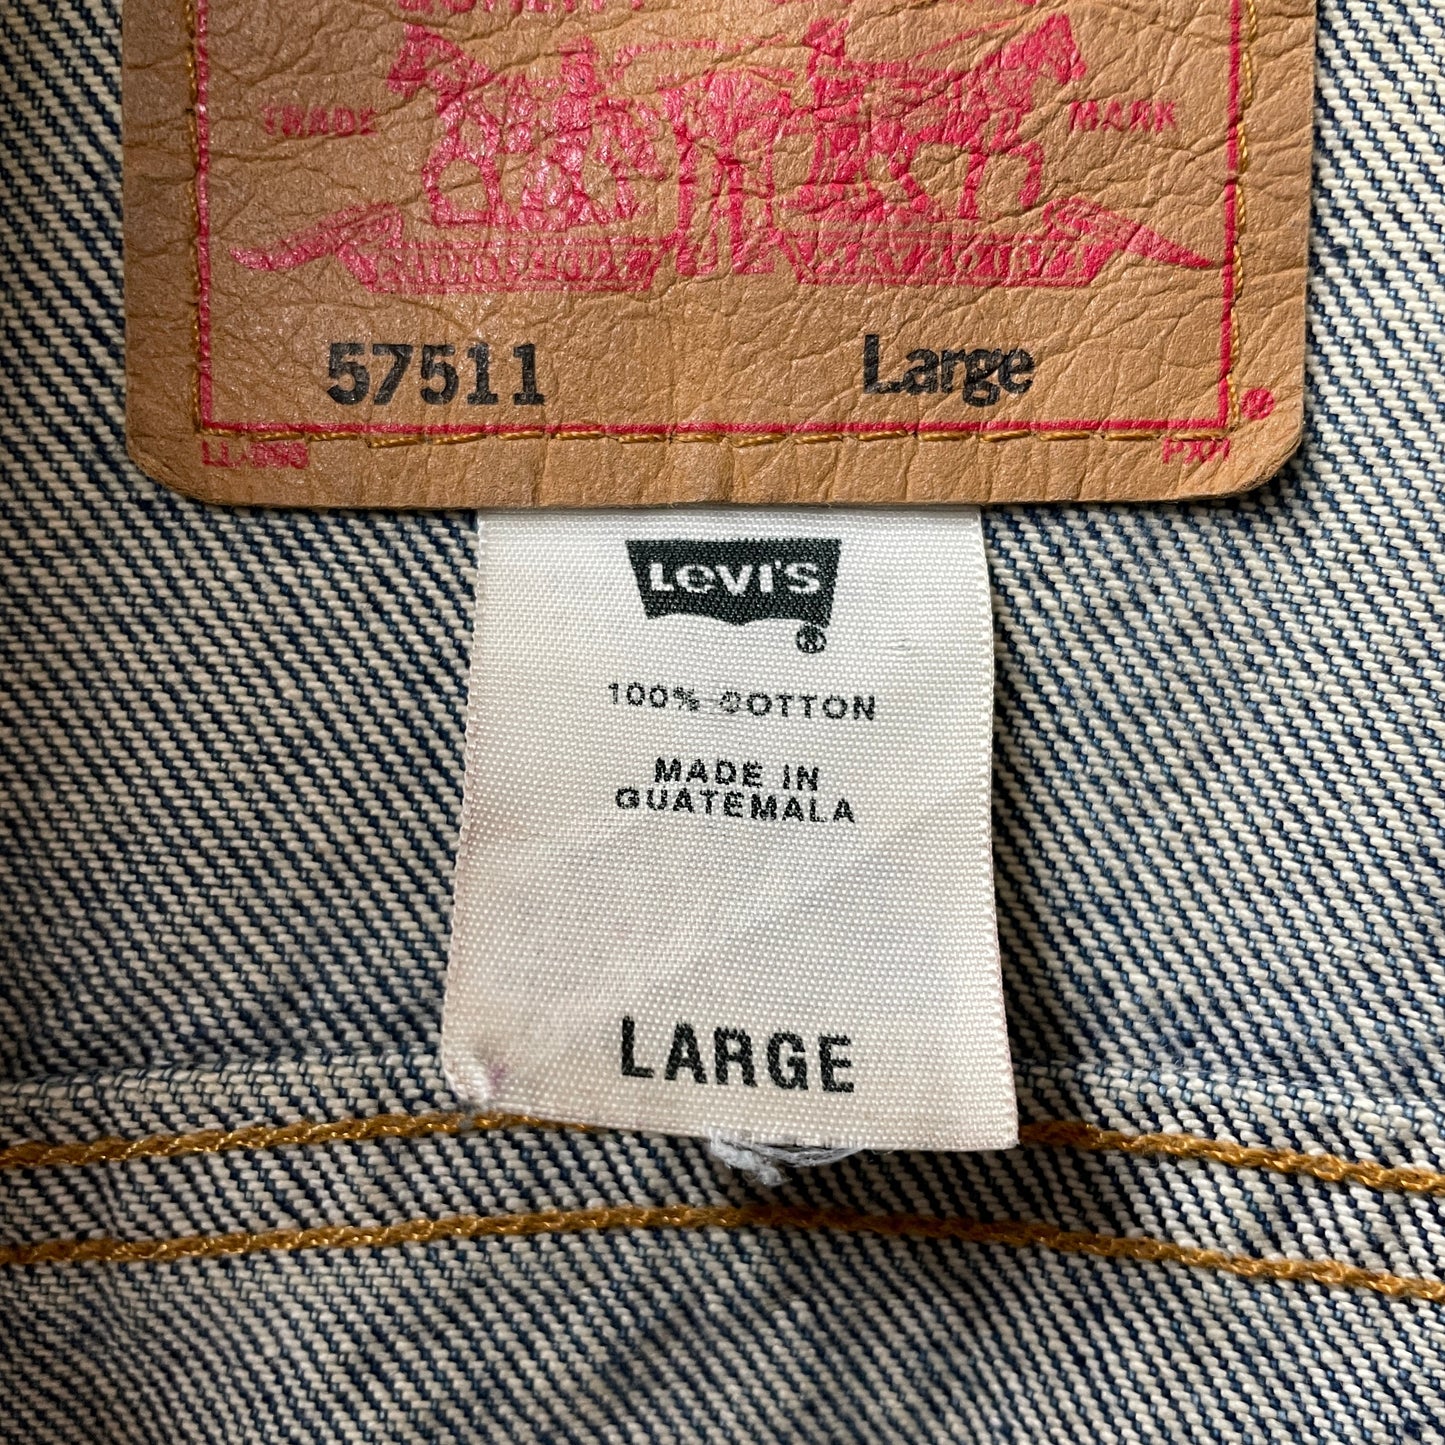 levi's57511 jacket デニムジャケット